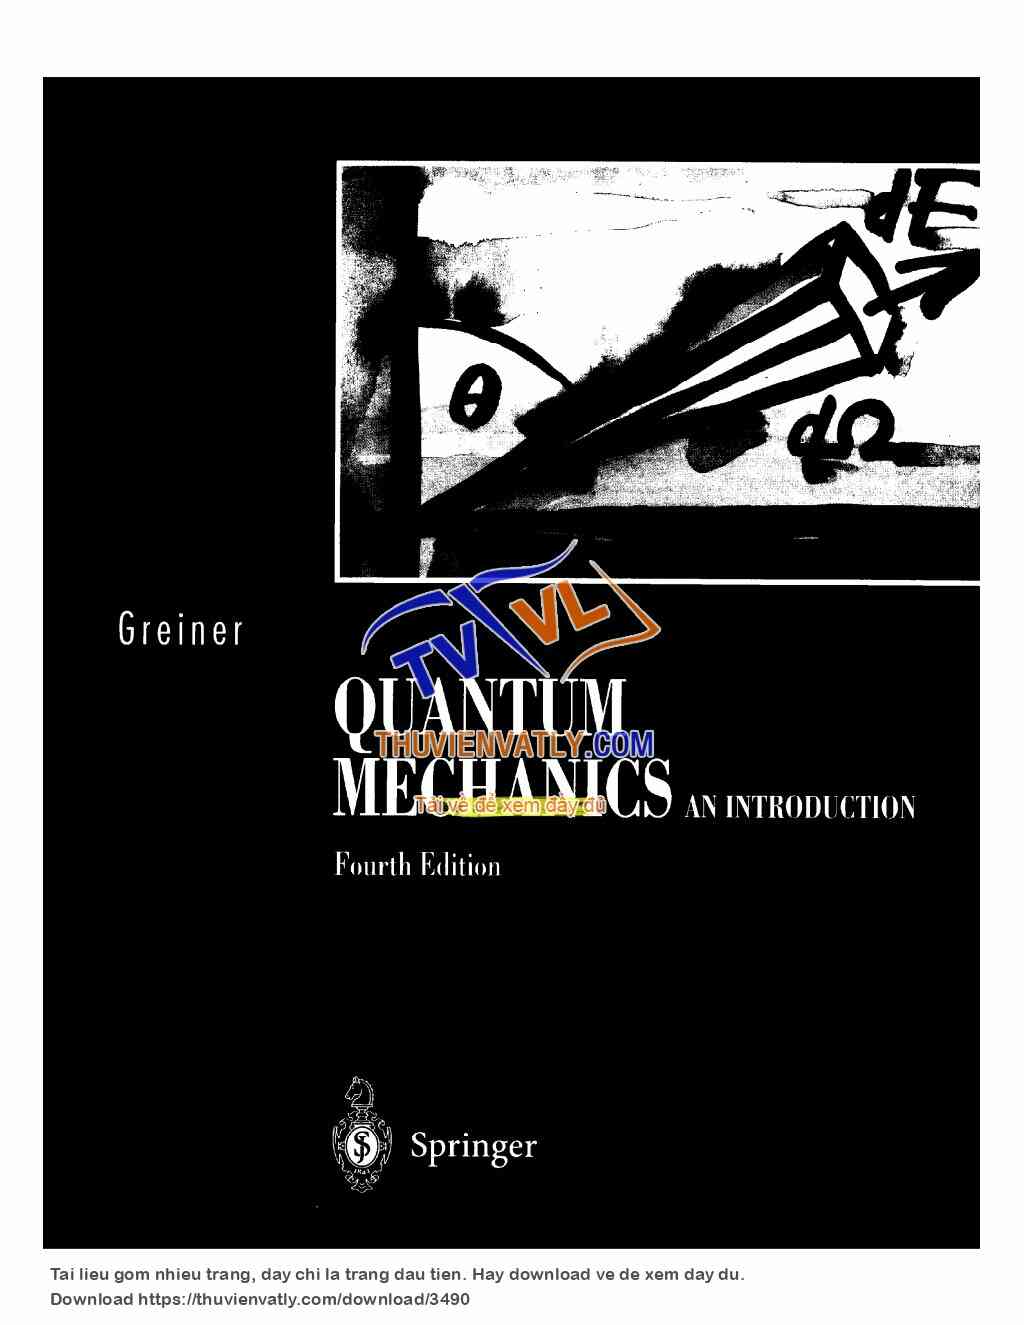 Greiner - Quantum Mechanics. An Introduction